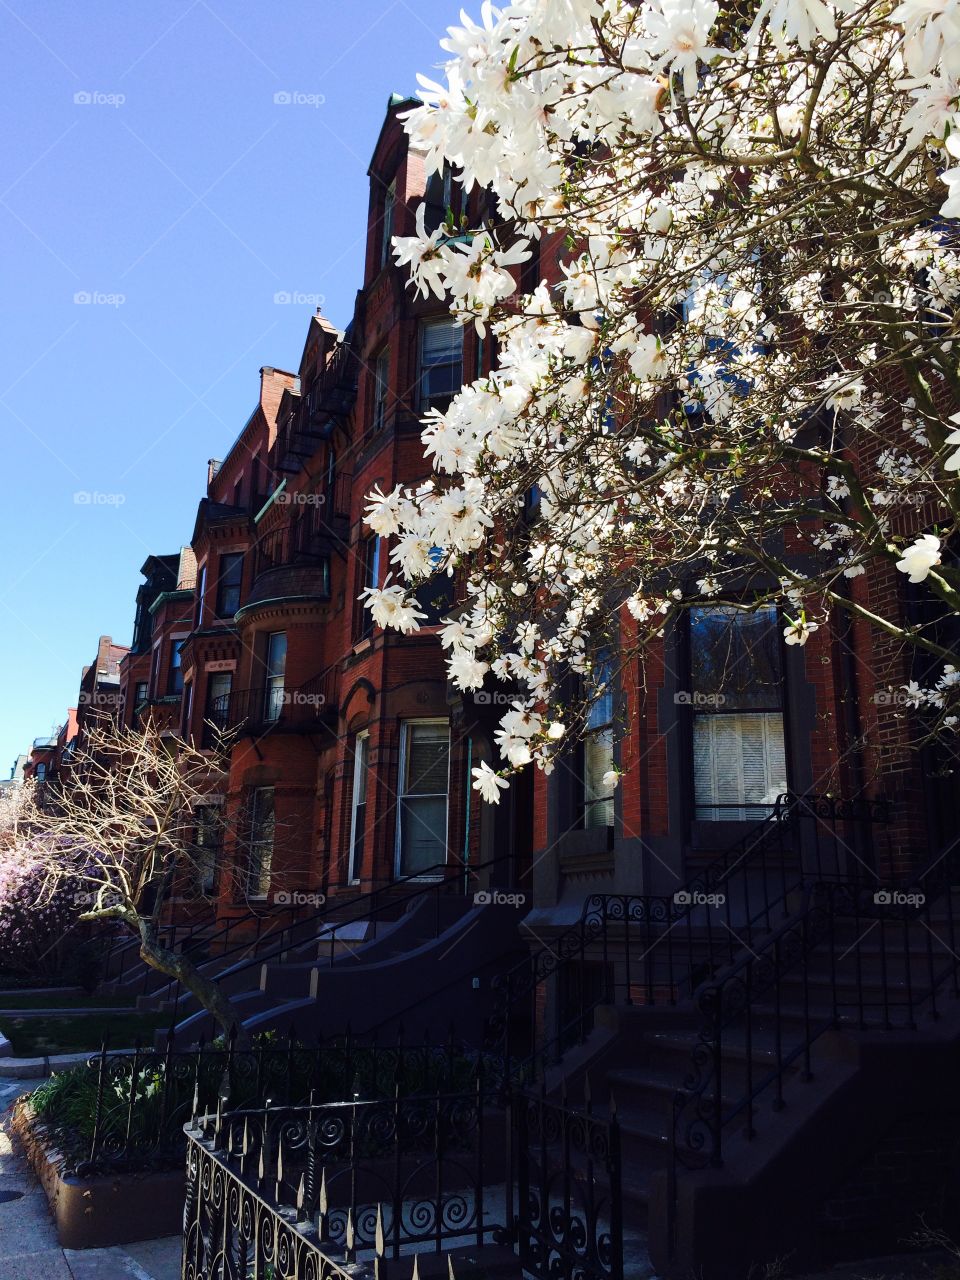 Boston in bloom 